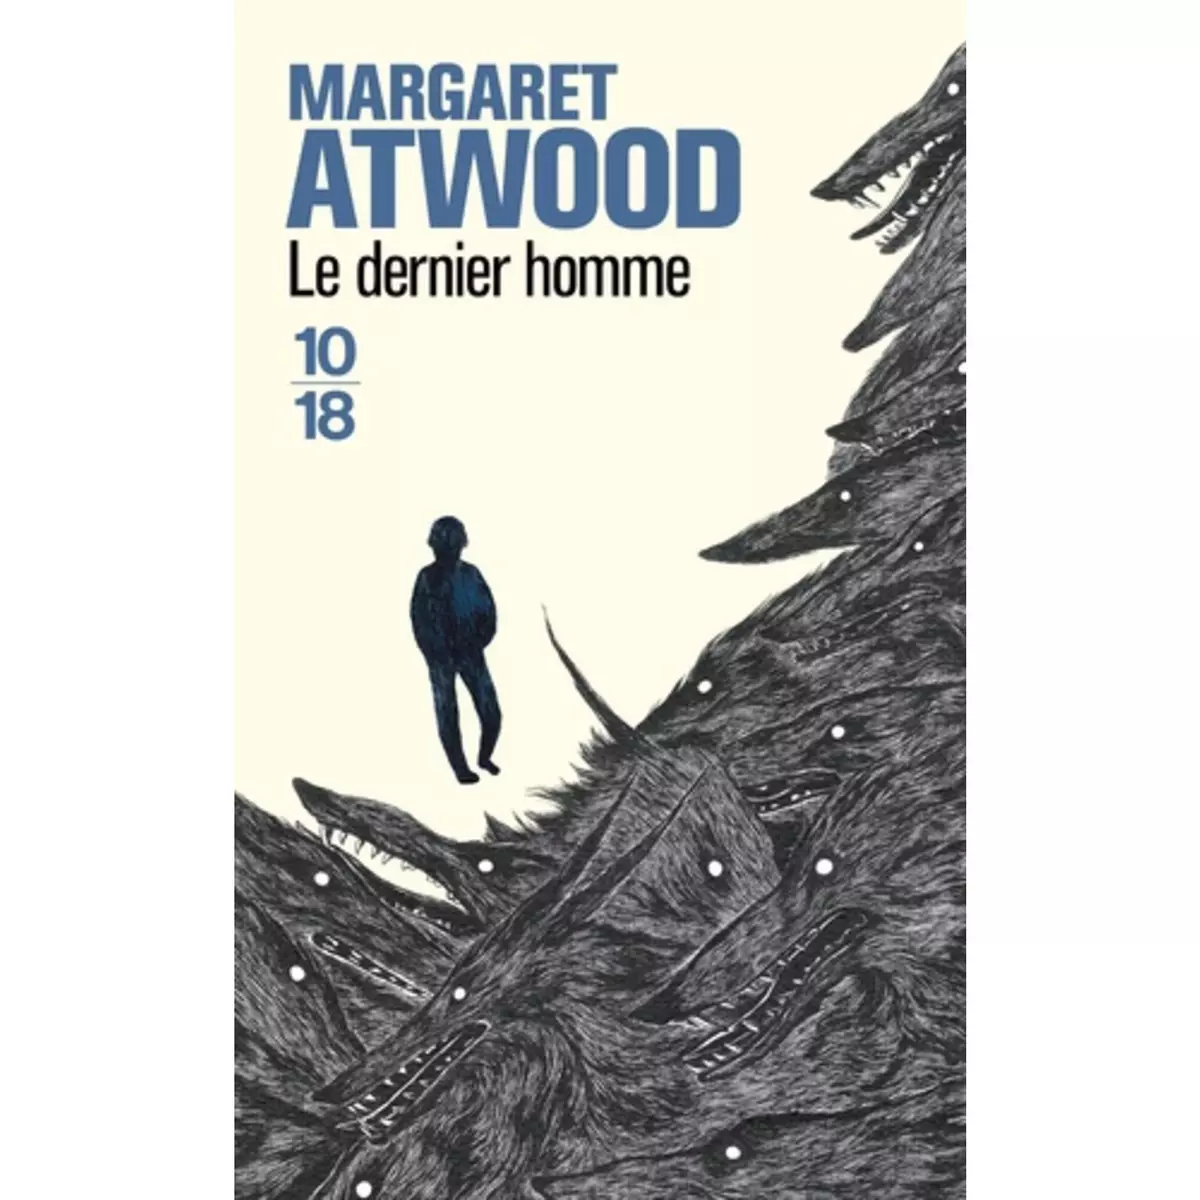  LE DERNIER HOMME, Atwood Margaret